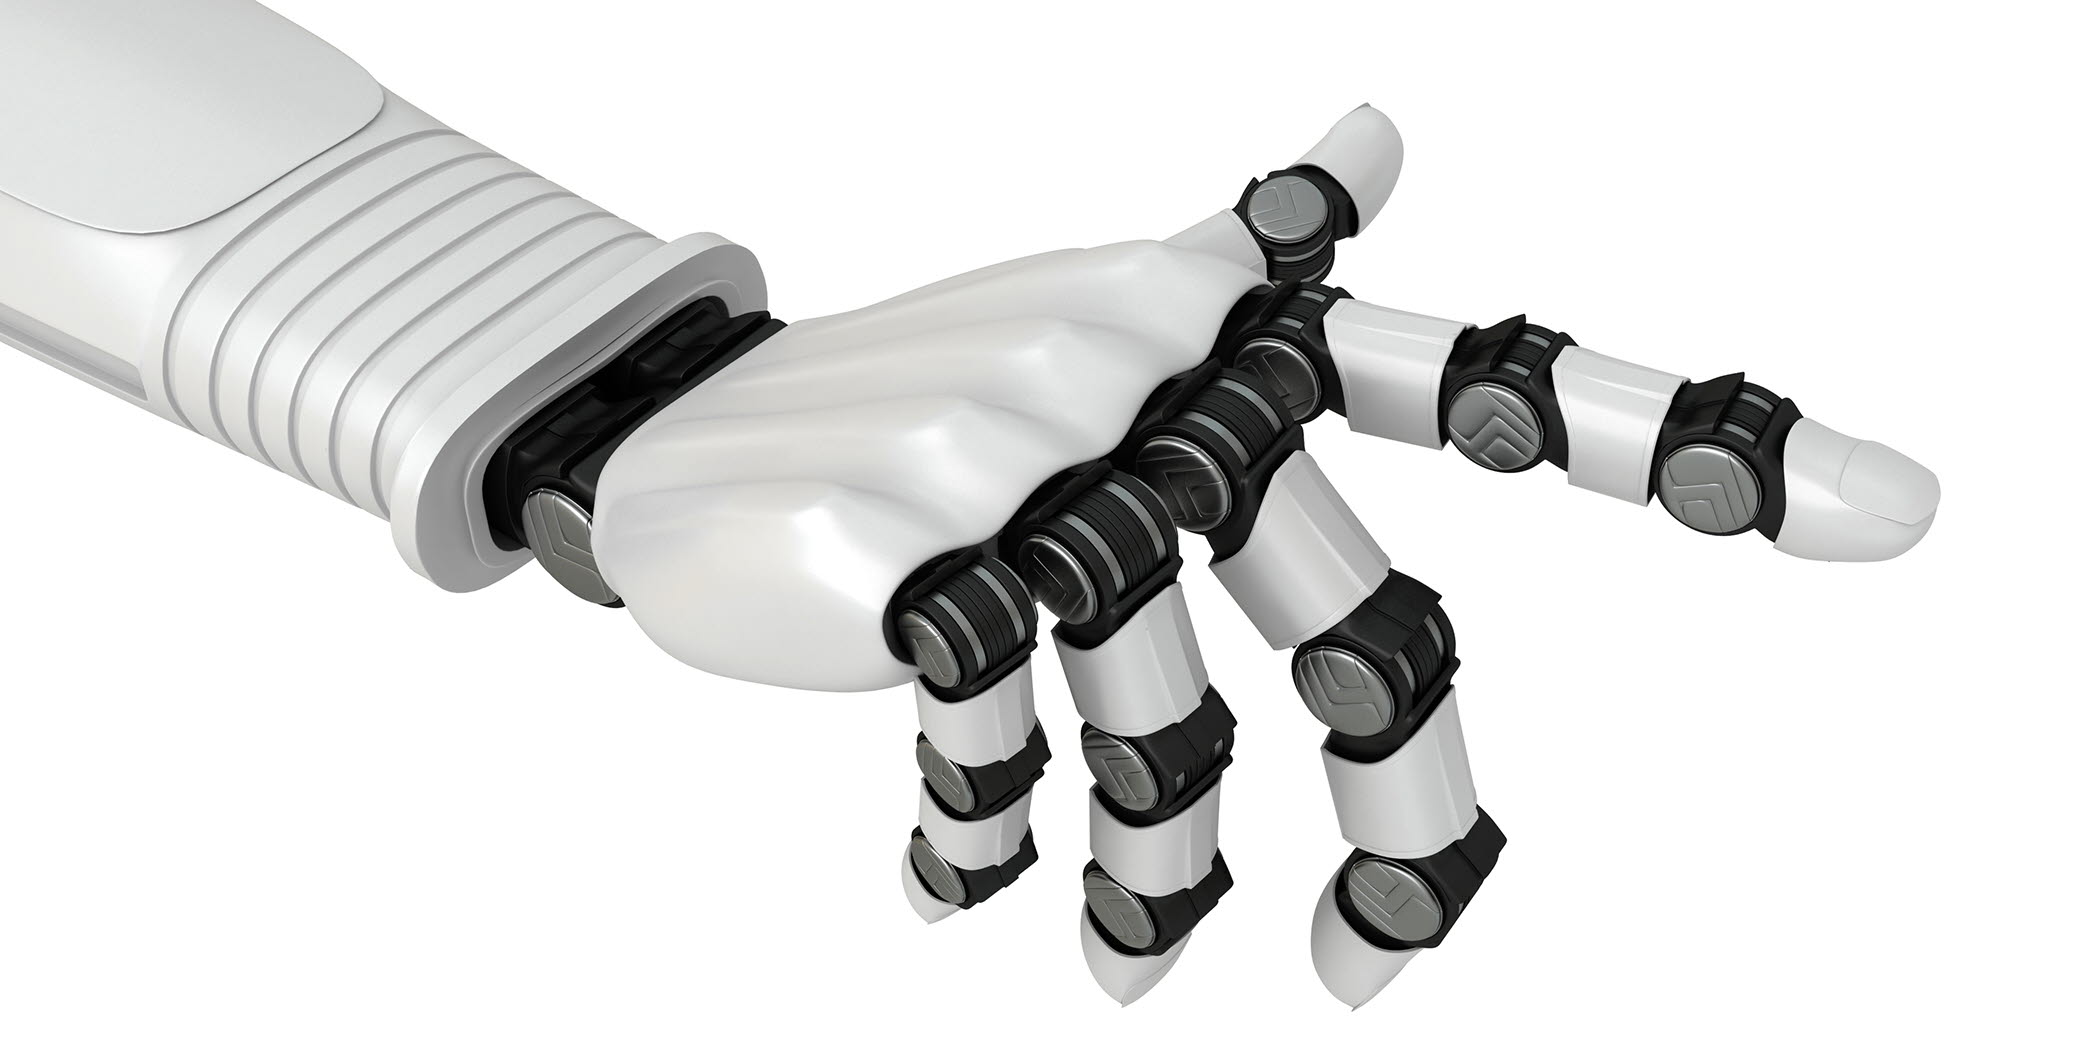 Robotic prosthetic hand